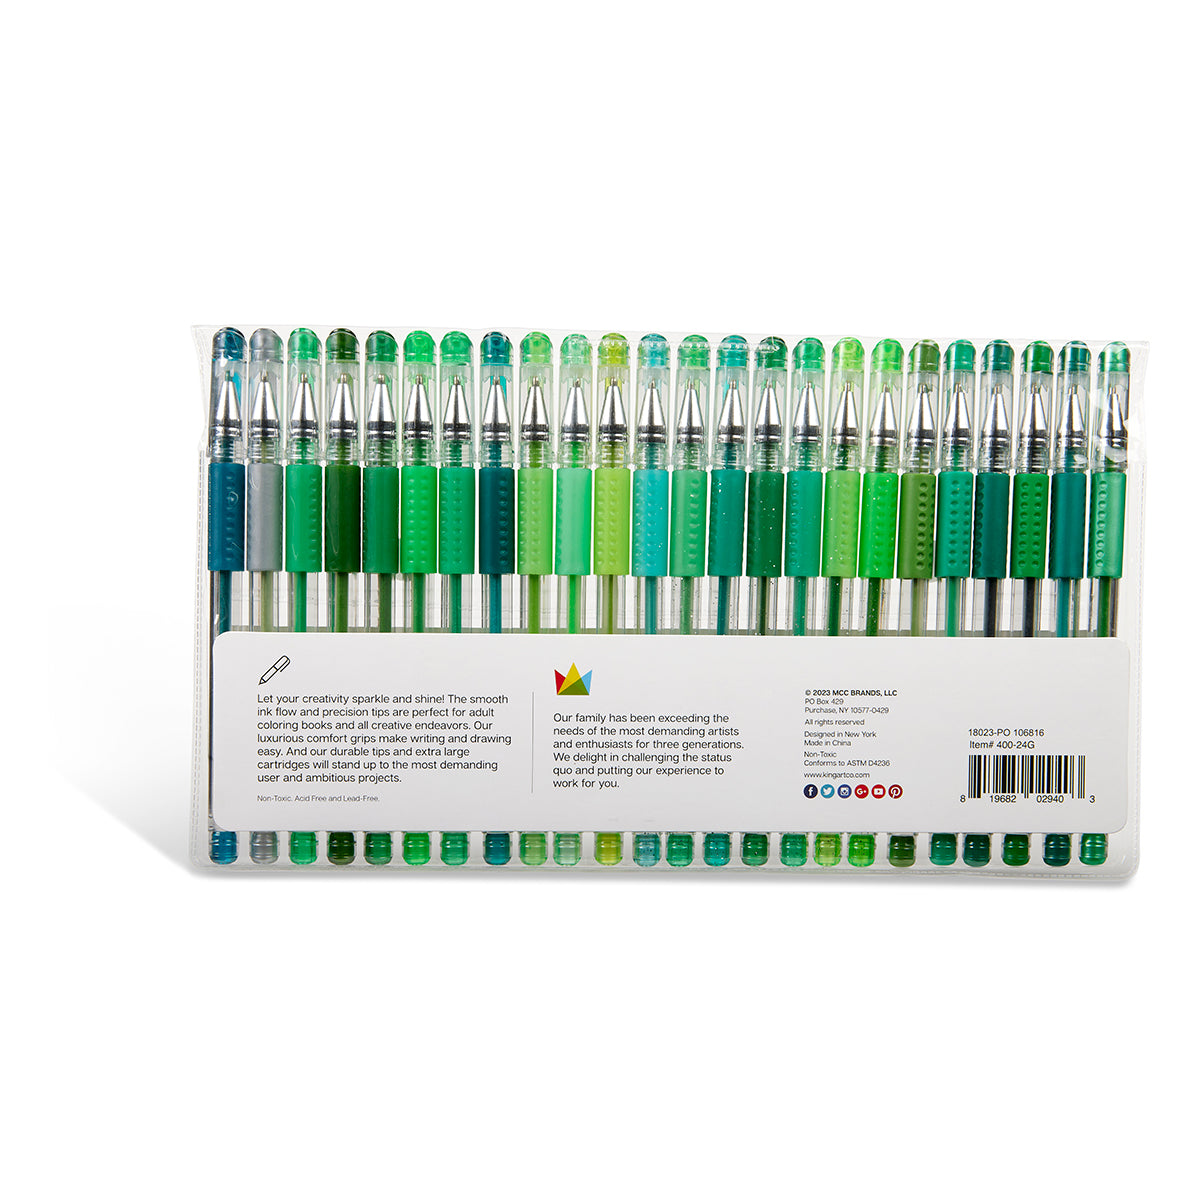 Glitter Gel Pens, 100 Color Glitter Pen Set for Making Cards, 30% More Ink  Neon Glitter Gel Marker for Adult Coloring Books, Journaling Crafting